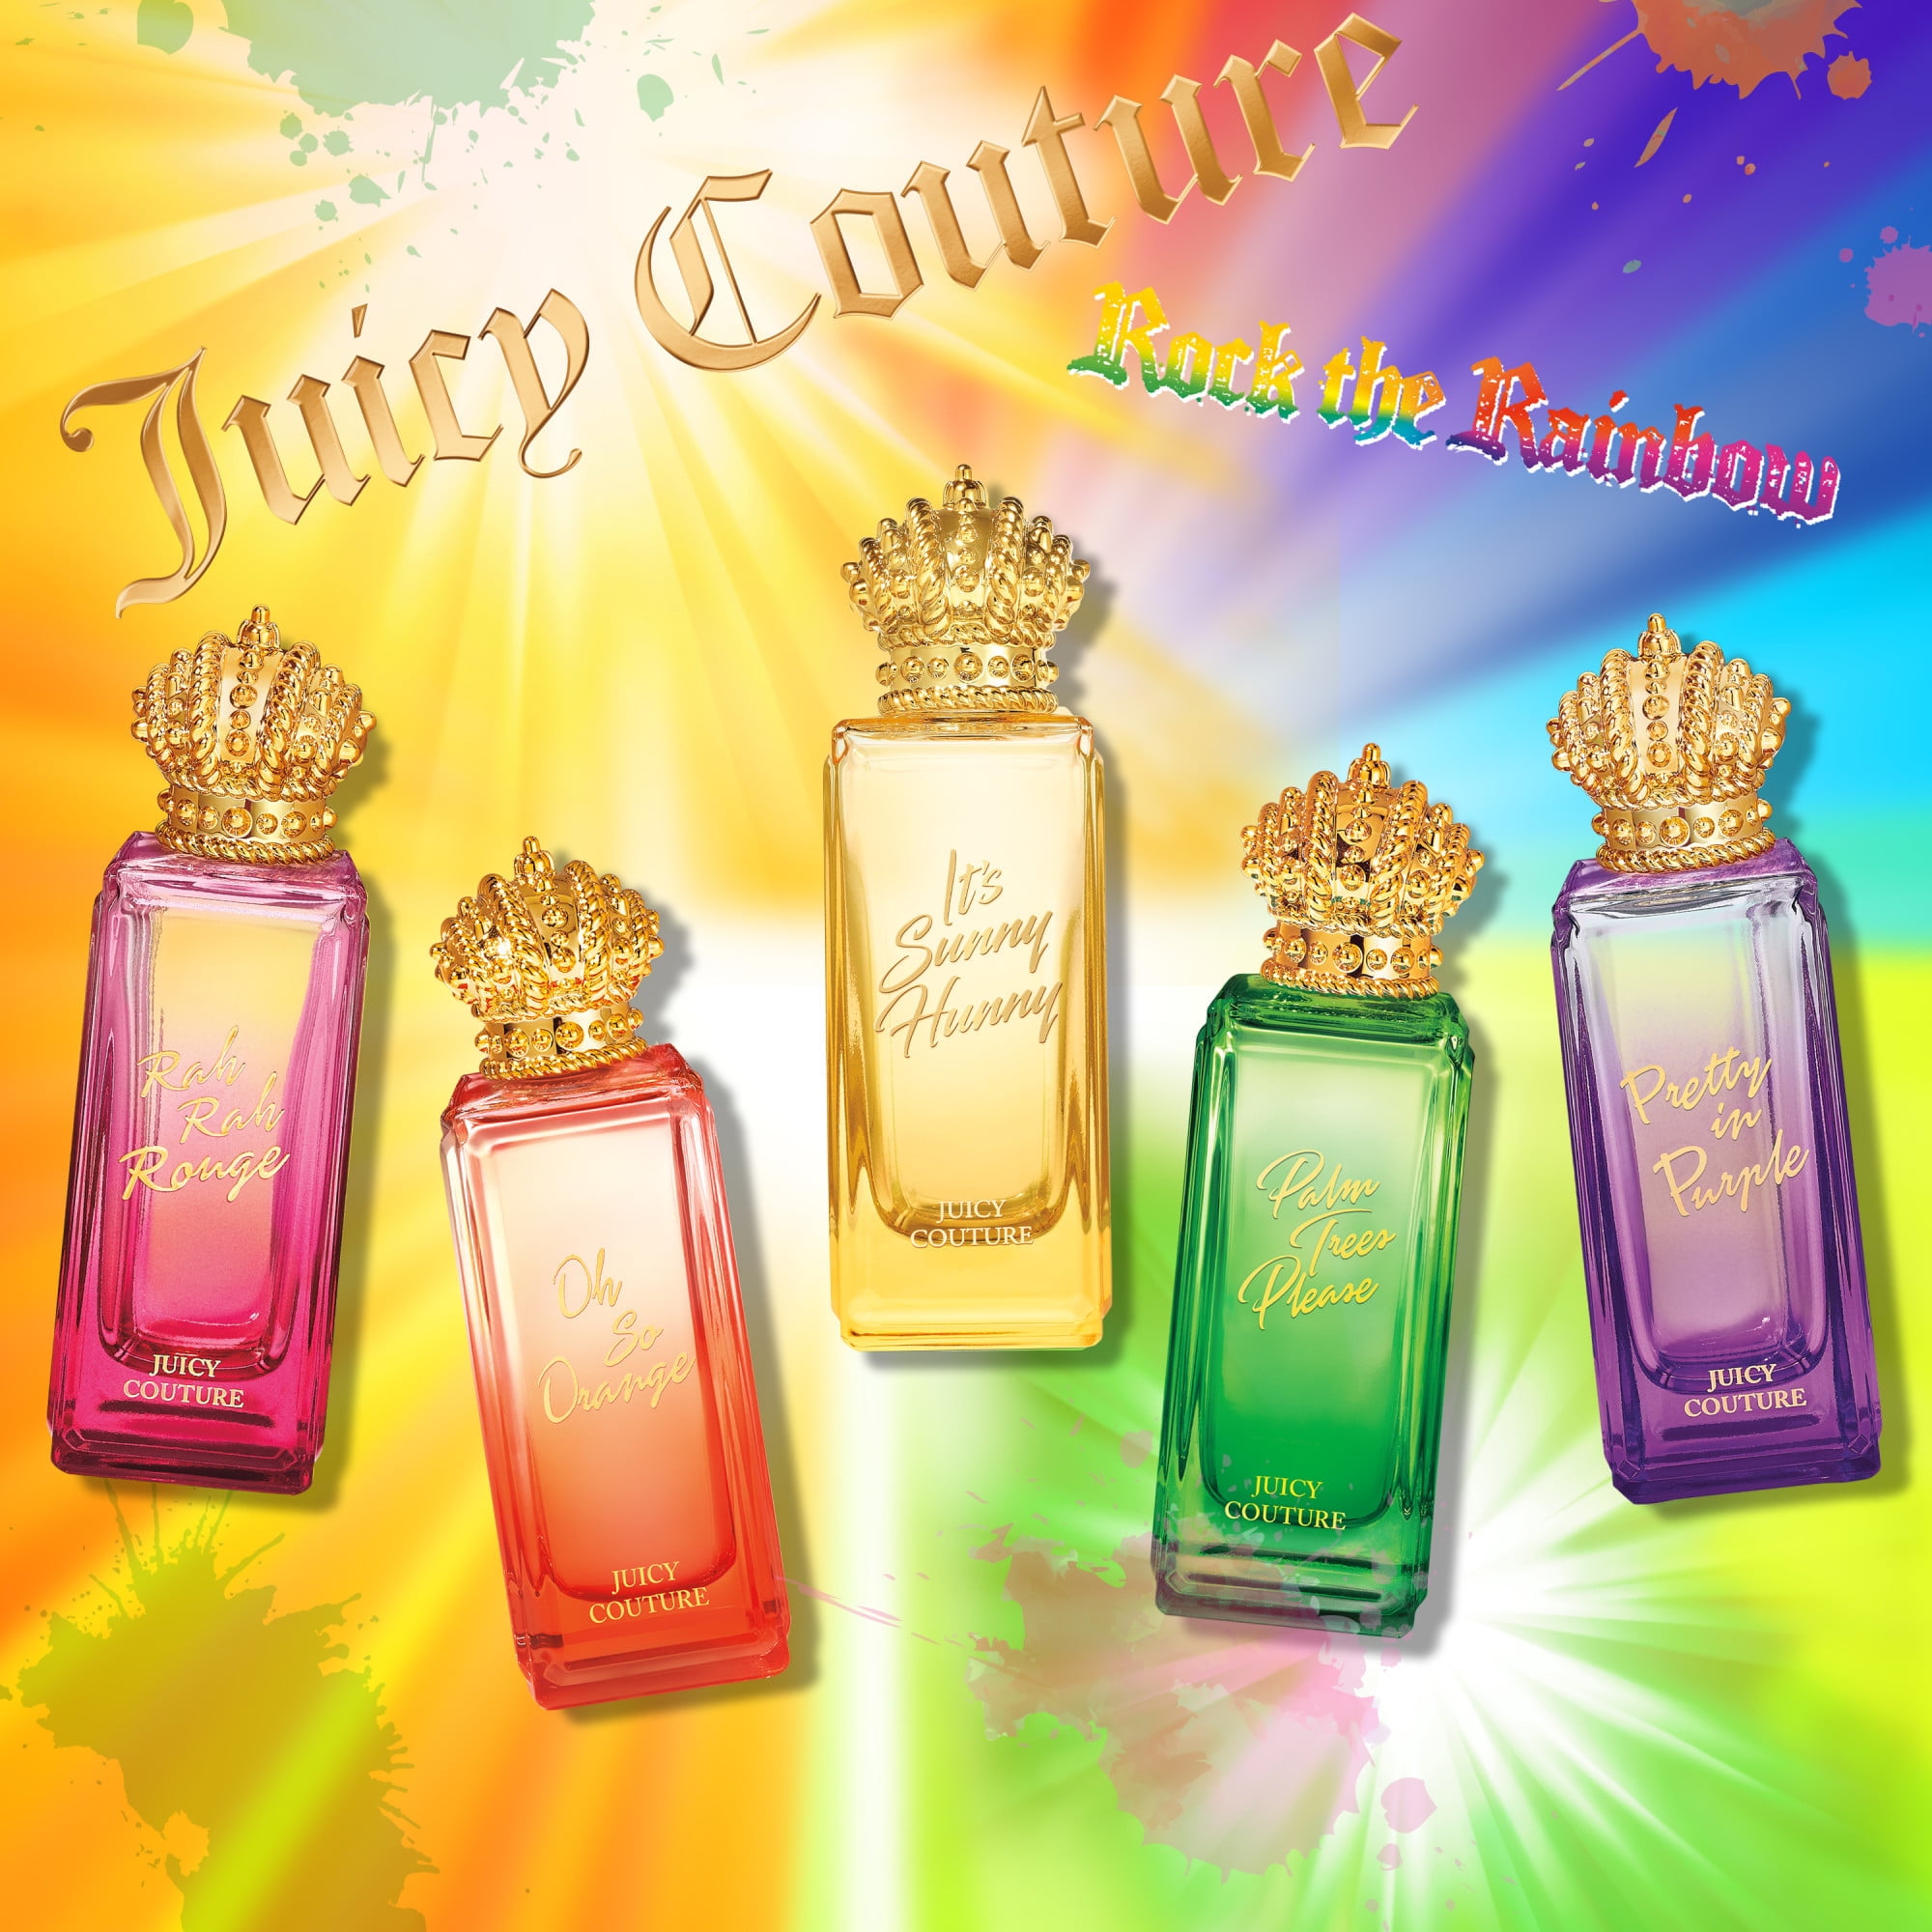 Juicy Couture Eau De Toilette Spray, Oh So Orange, Rock the Rainbow - 2.5 fl oz